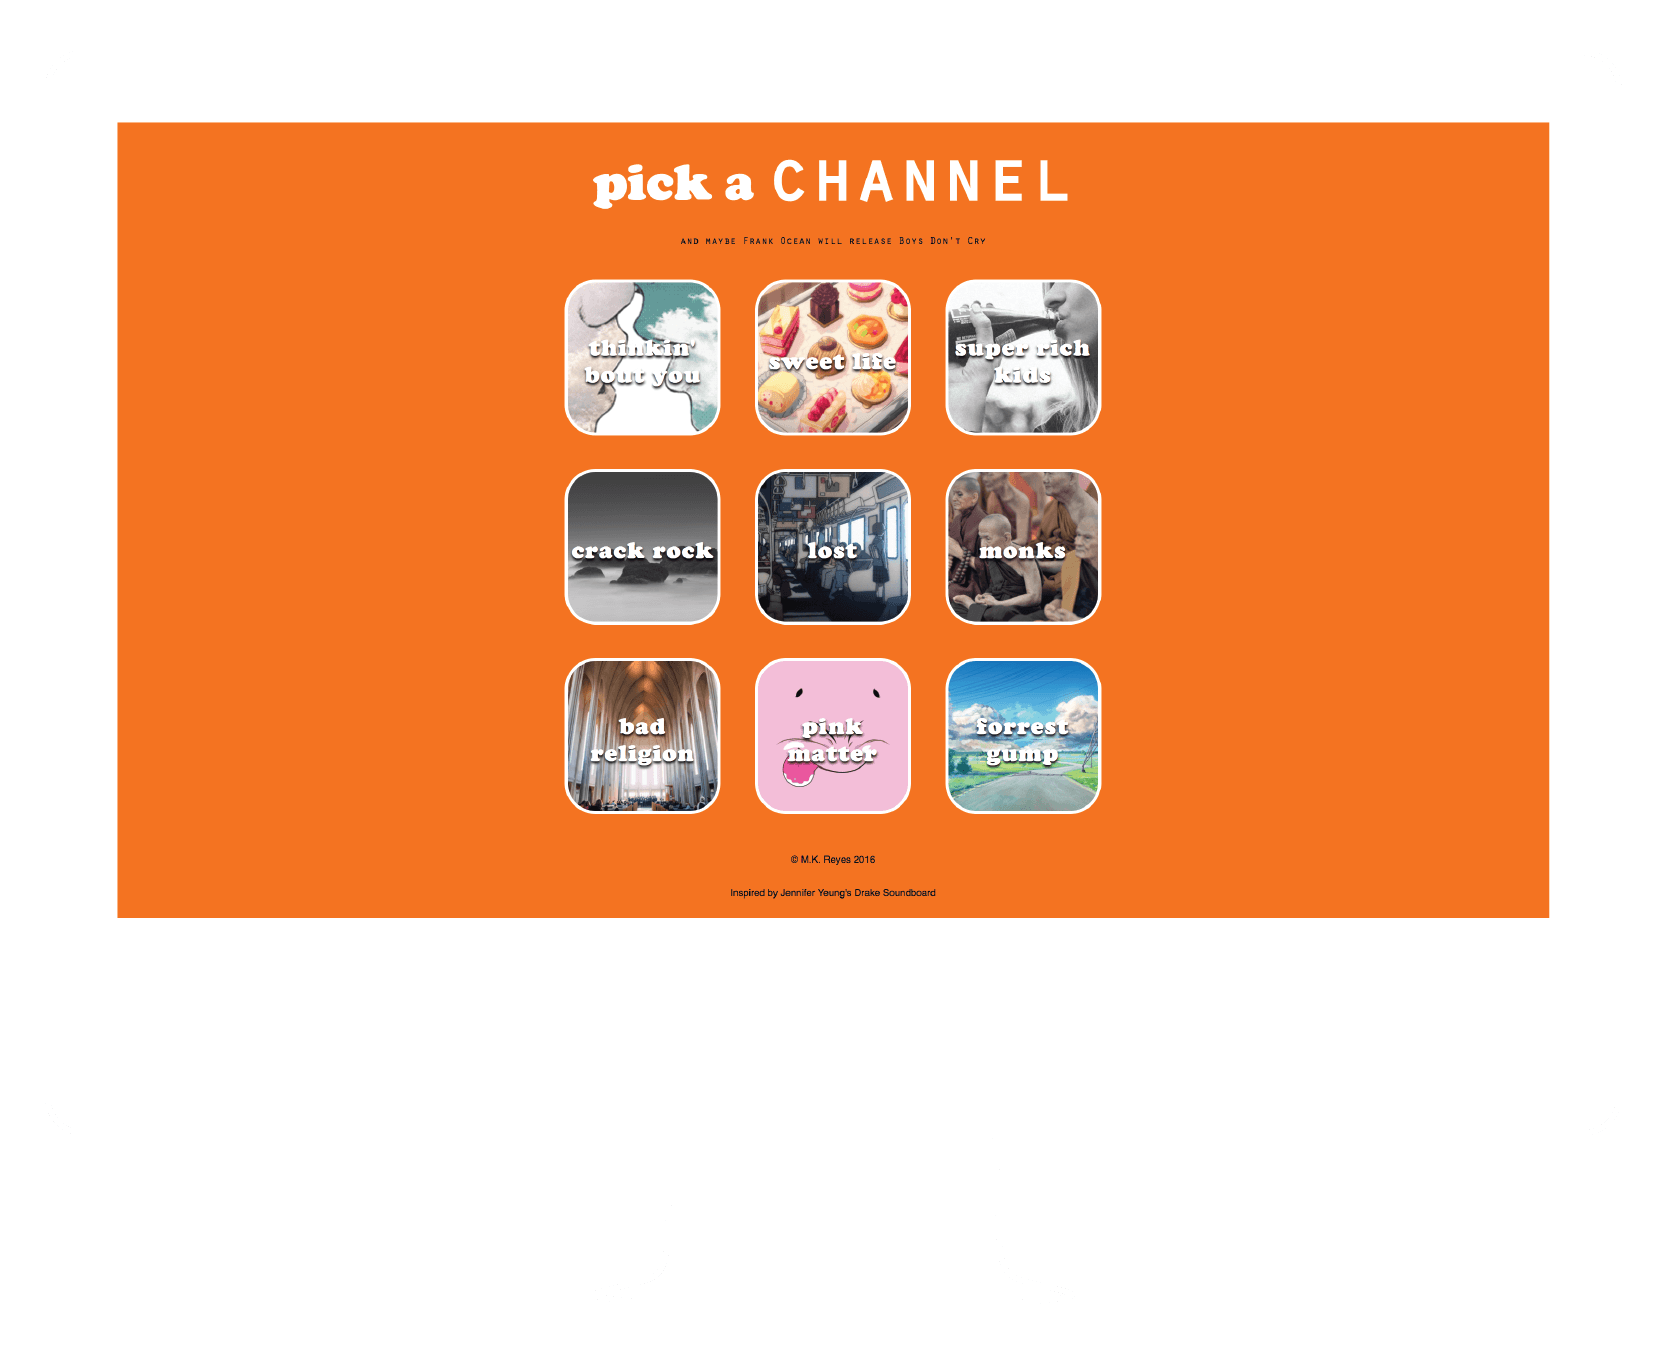 Channel O is an interactive soundclip board of Frank Ocean's Channel Orange album.